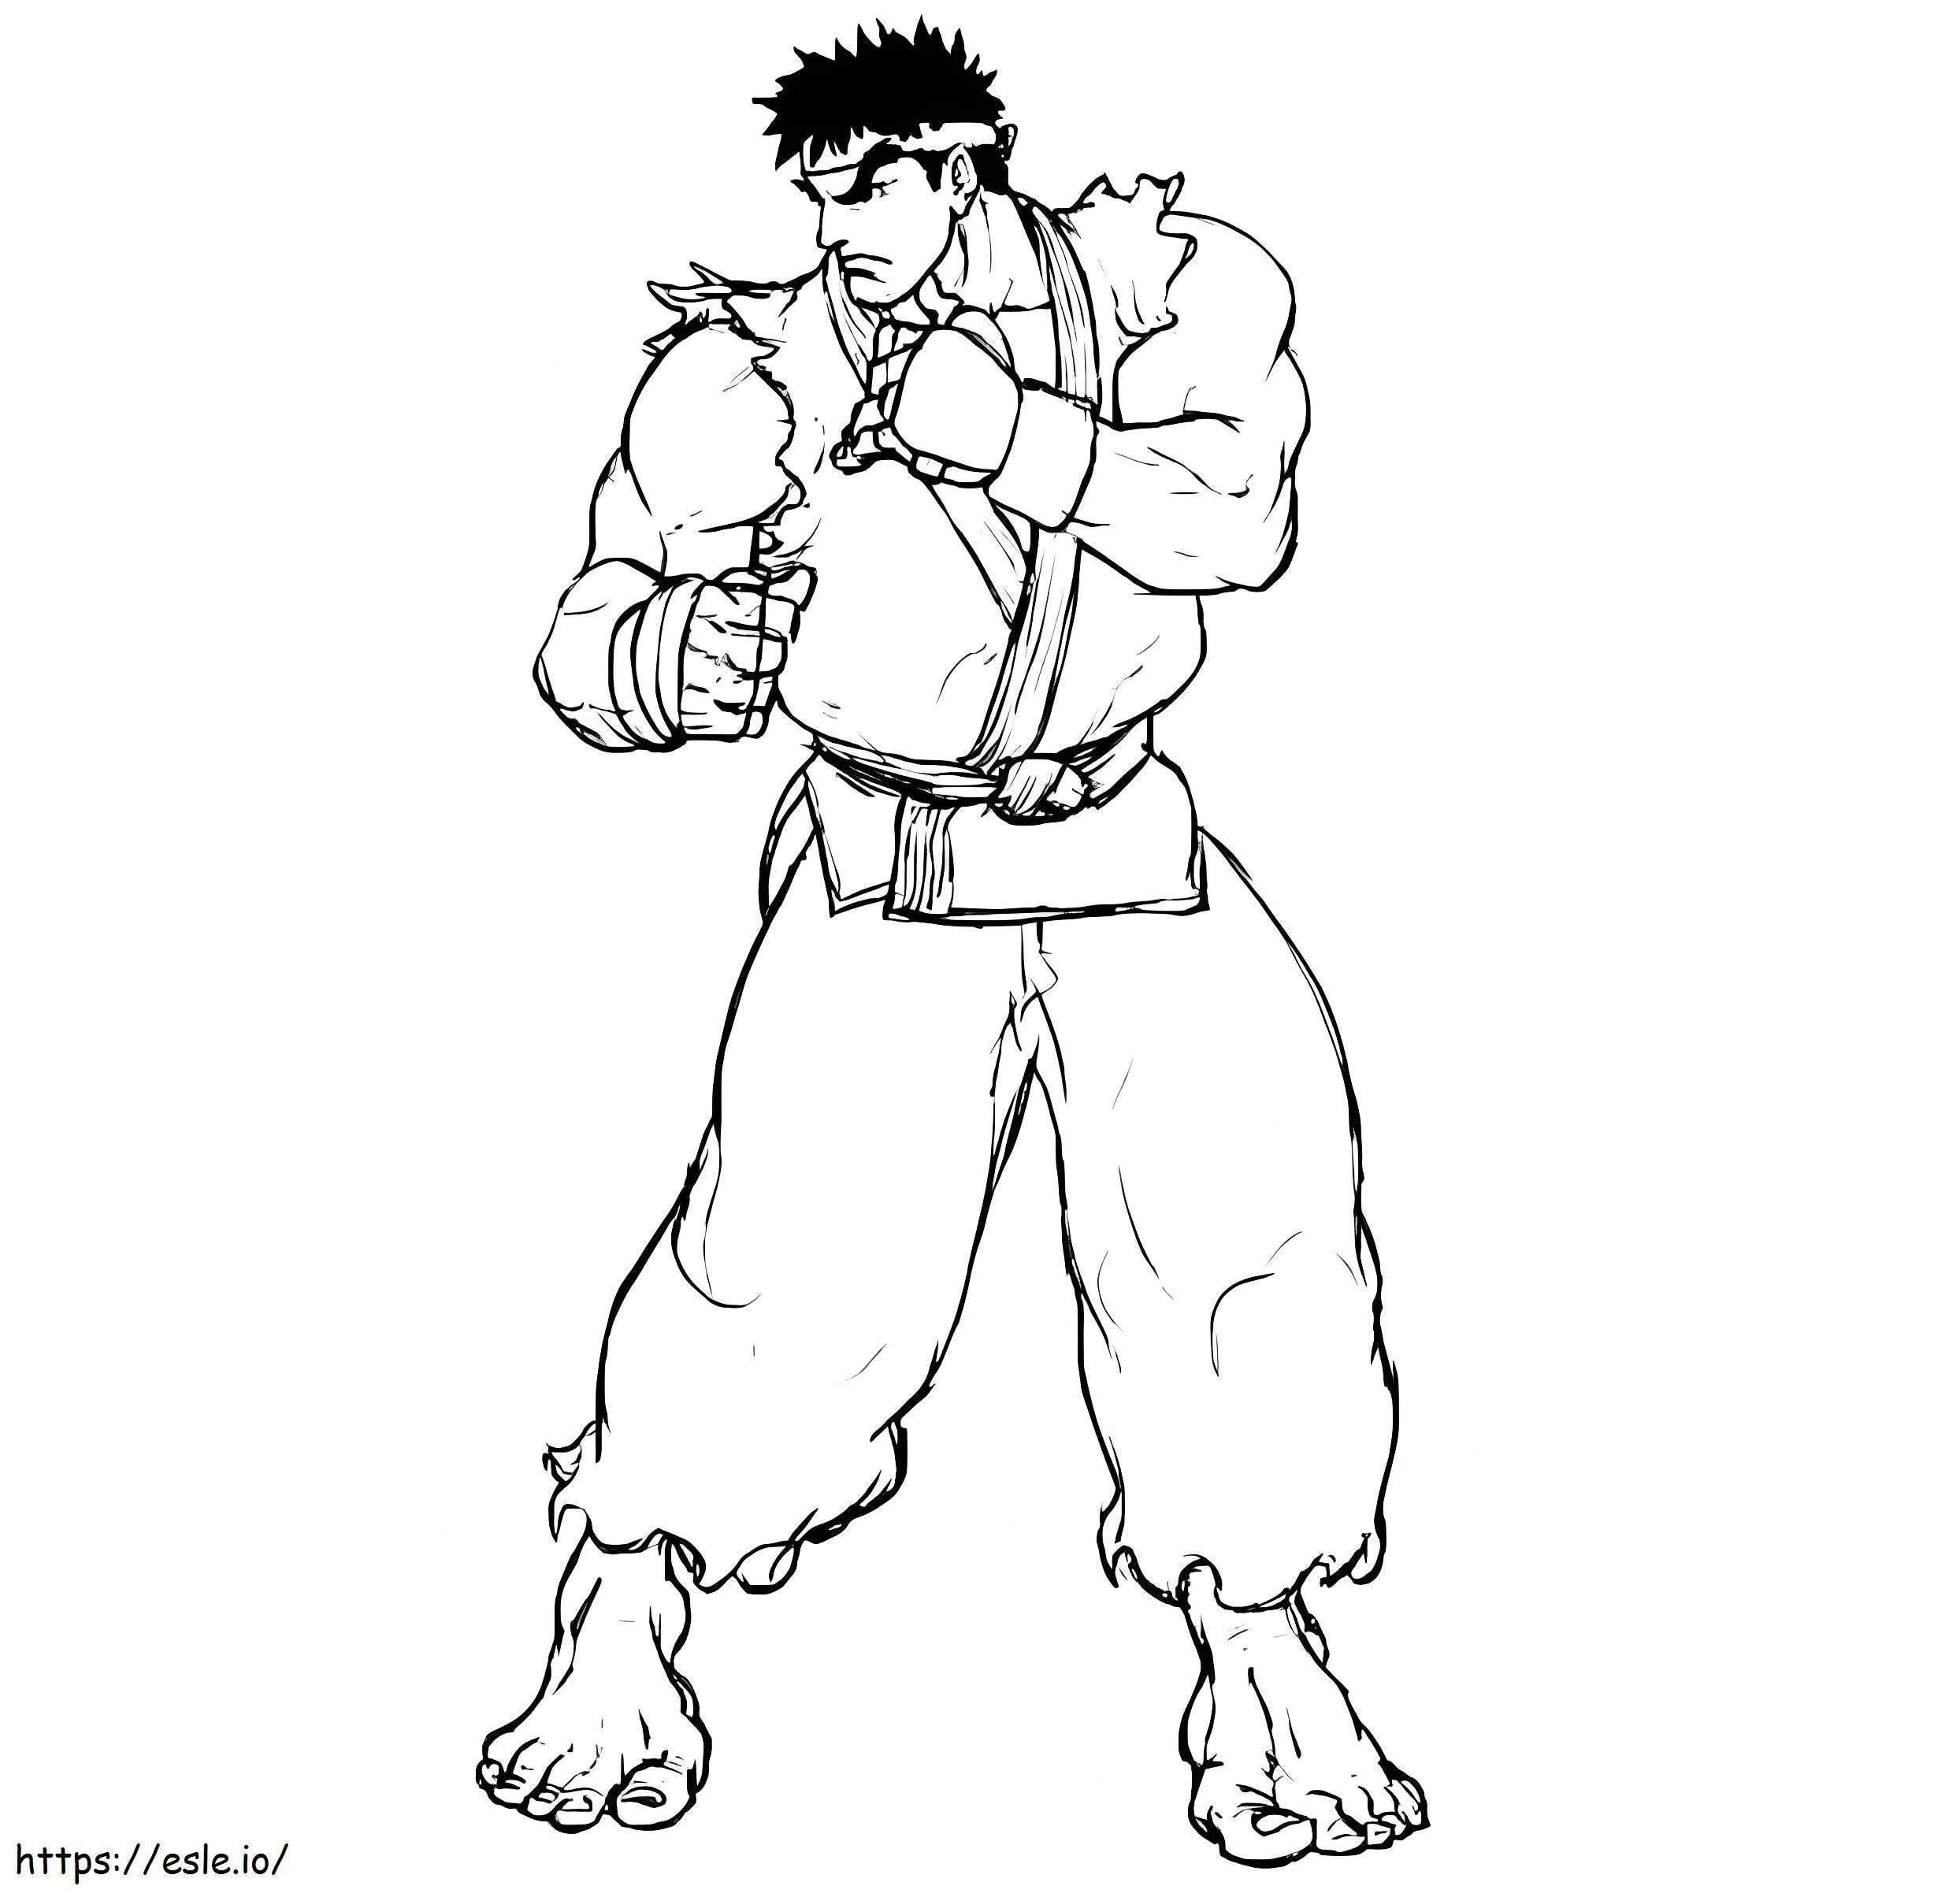 Ryus-Pose ausmalbilder